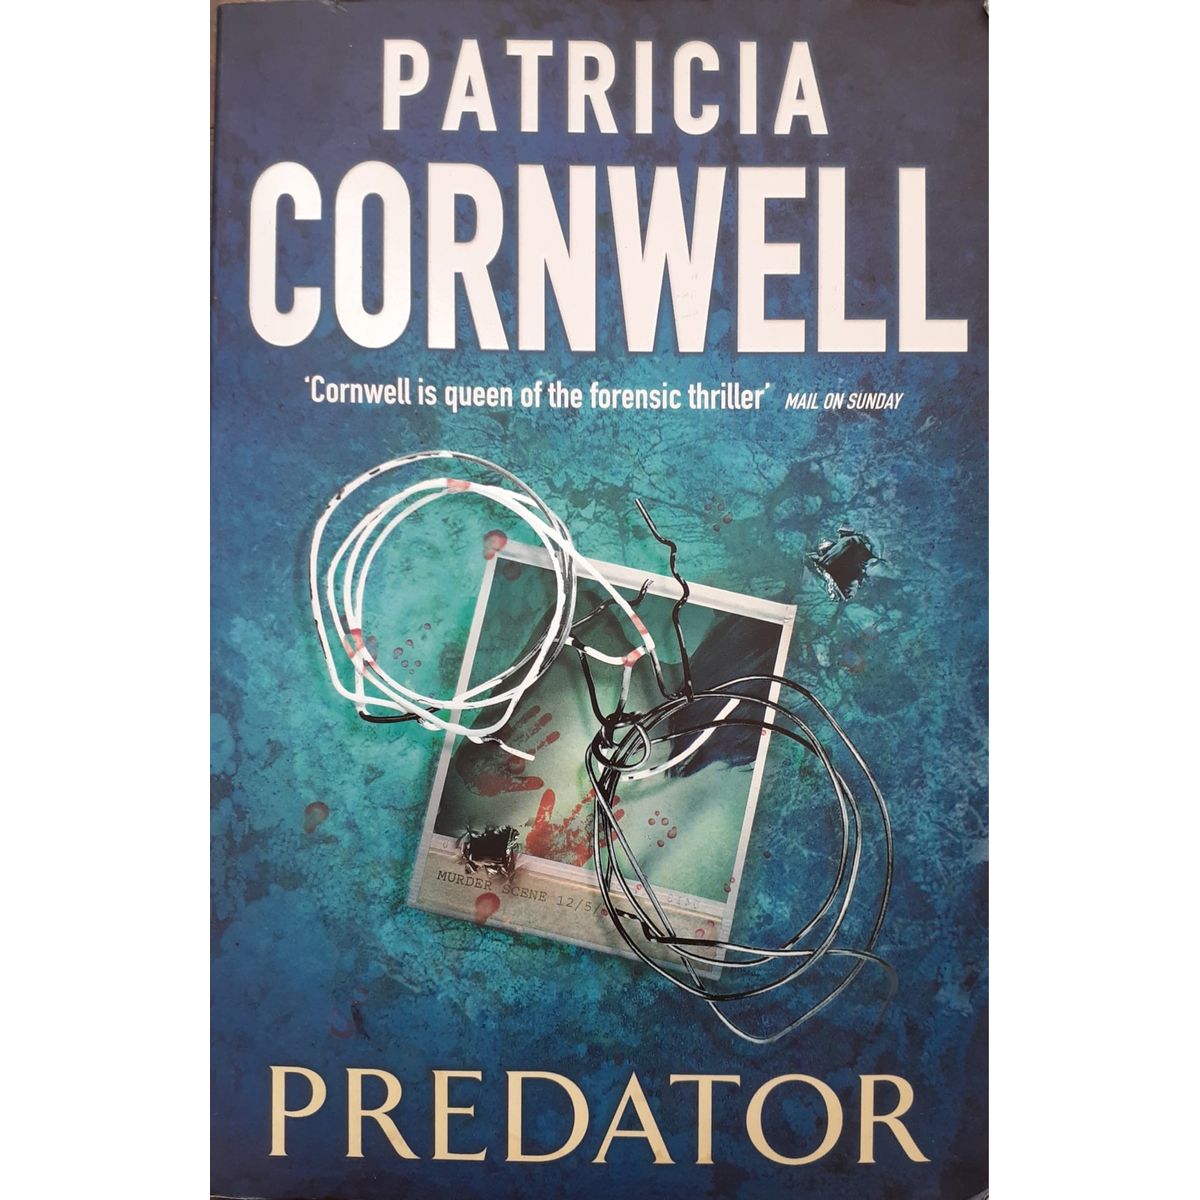 ISBN: 9780316724241 / 0316724246 - Predator by Patricia Cornwell [2005]